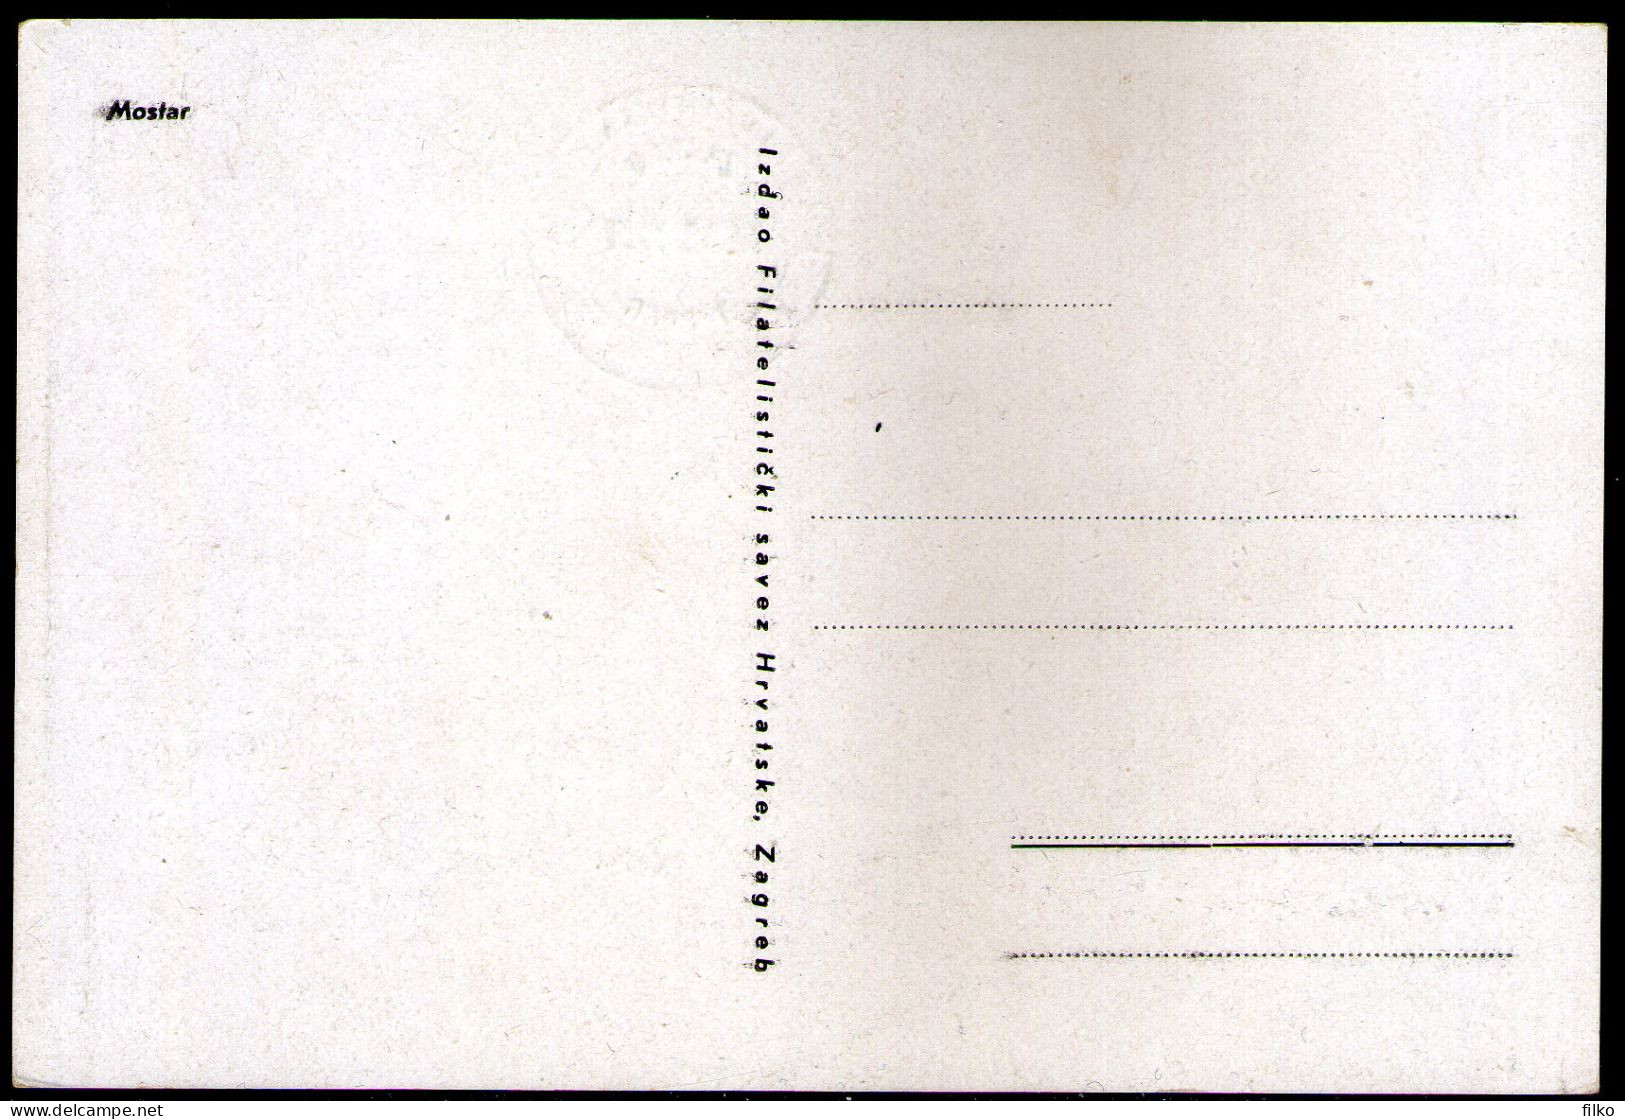 YUGOSLAVIA,1951 ZAGREB ZEFIZ Nice Maximum Card Mostaras Scan - FDC